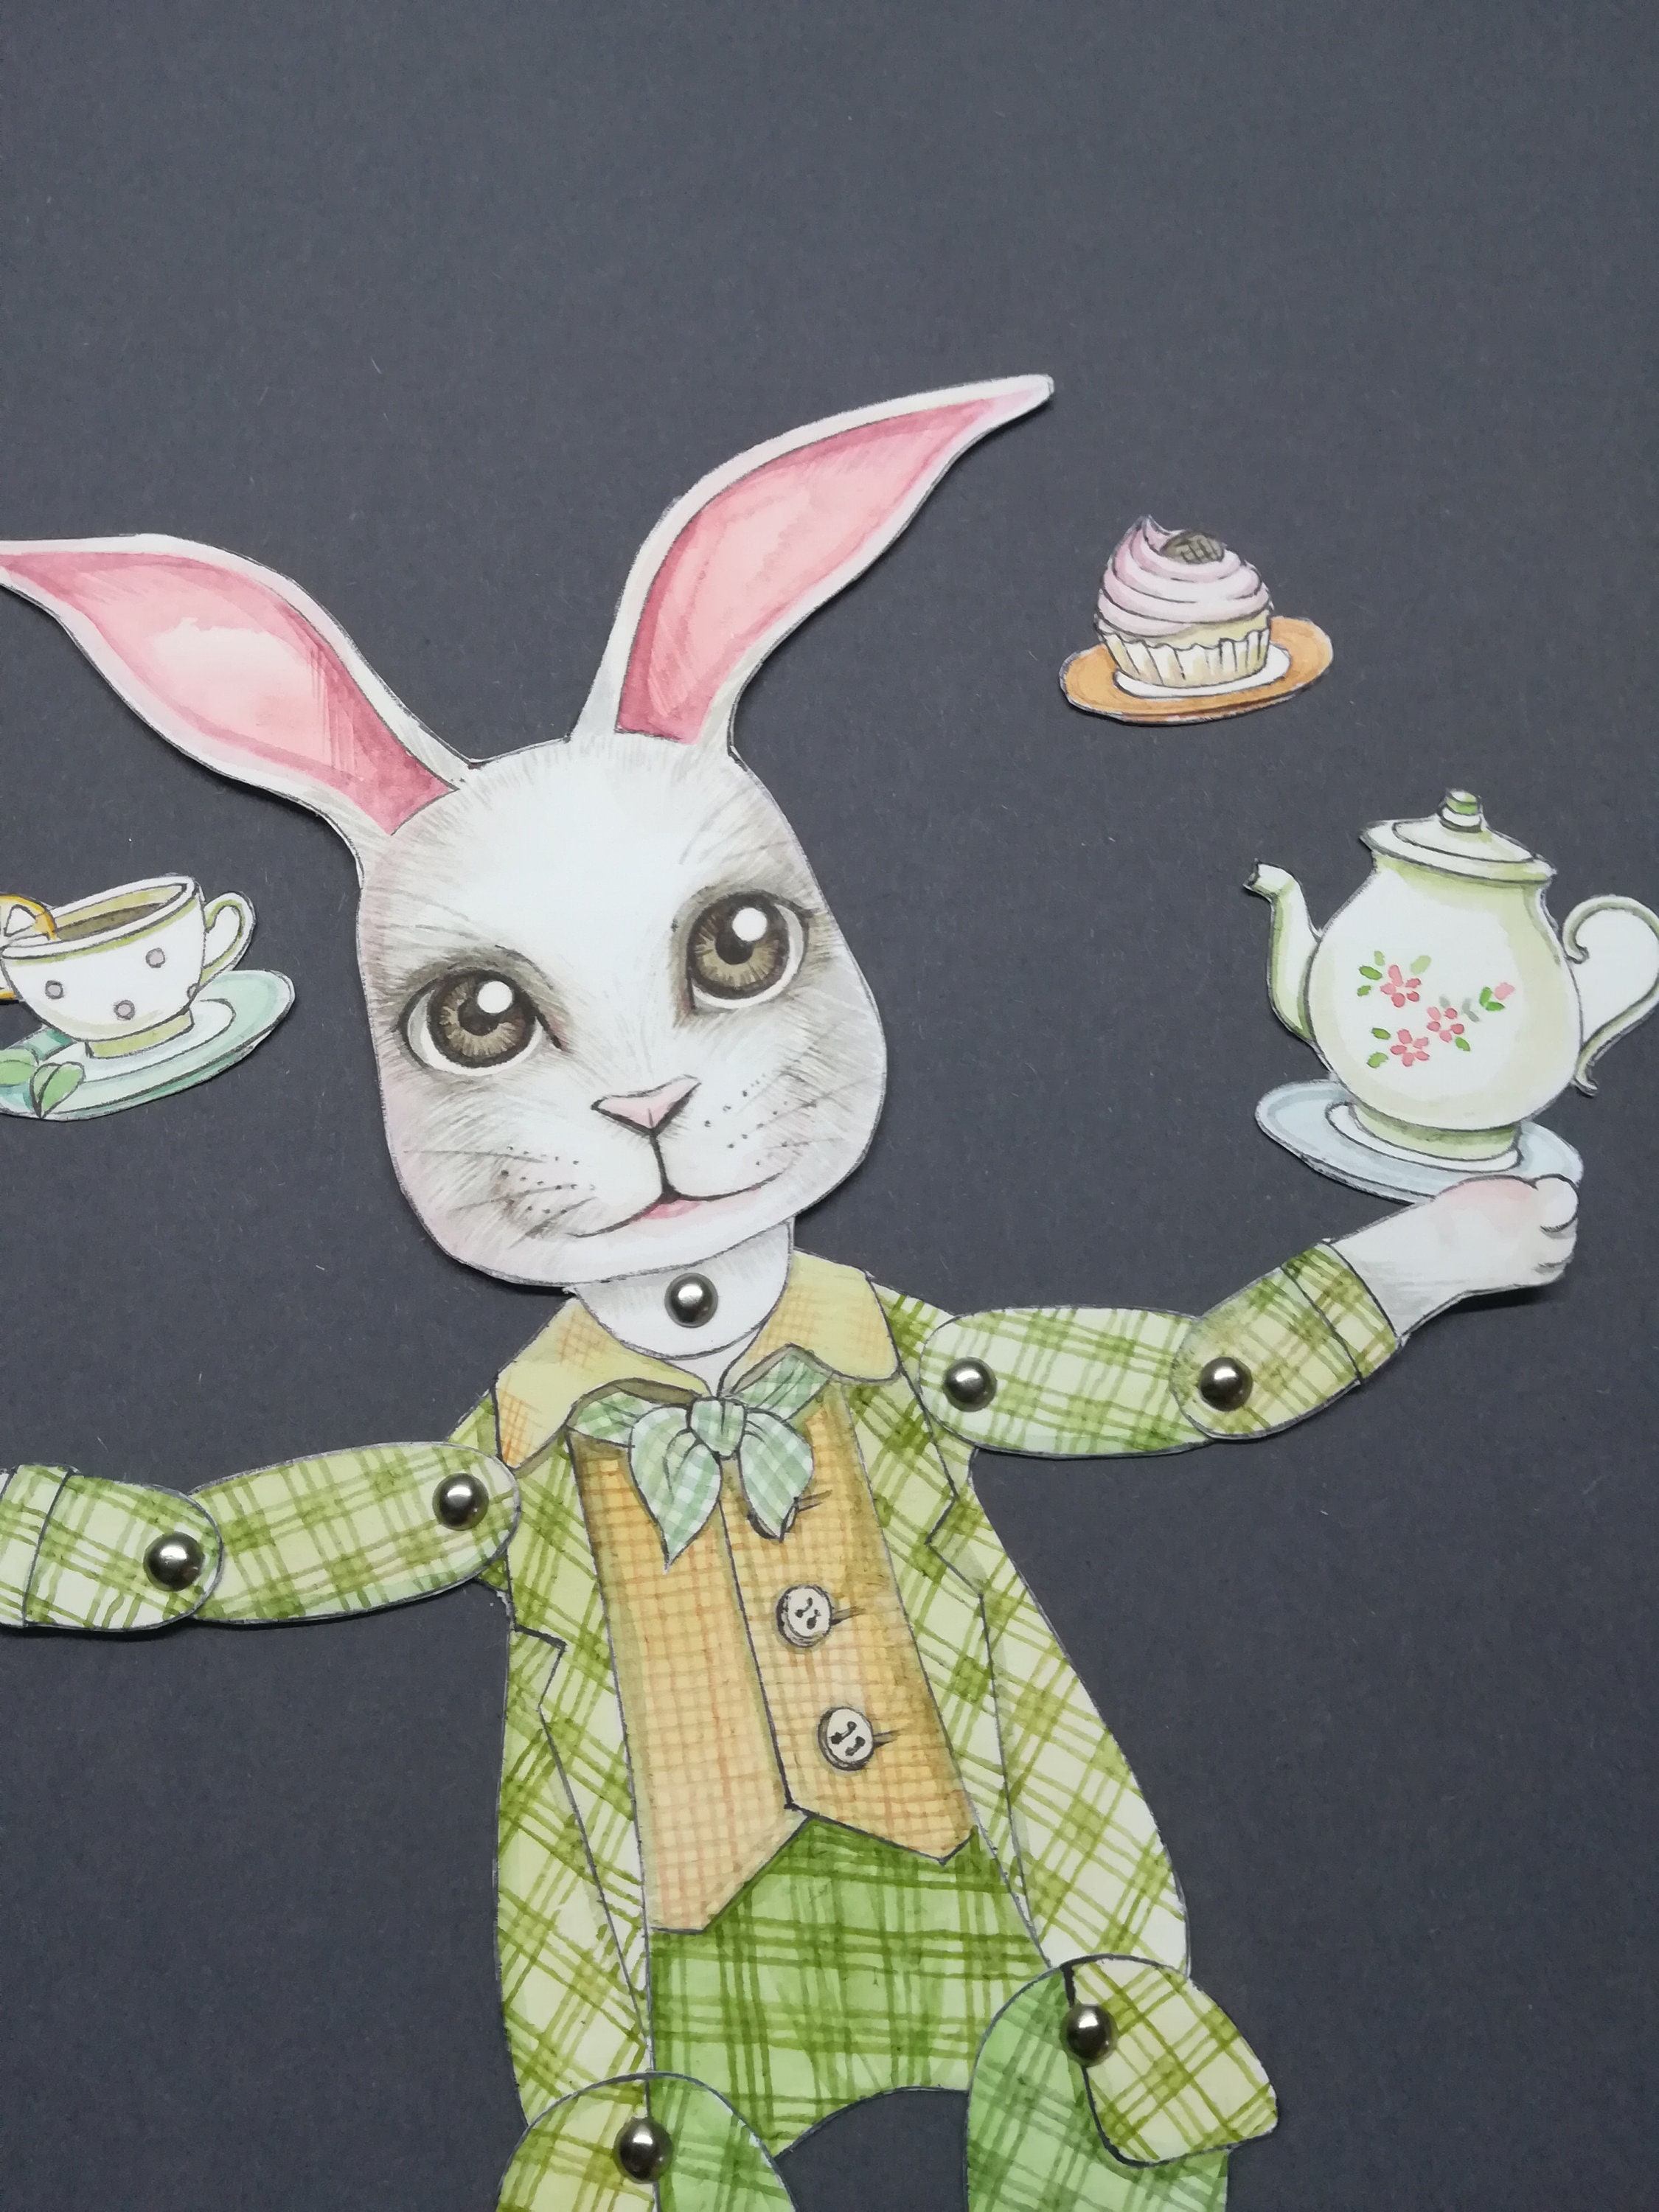 paper doll instant download paper dolls digital paper toys digital prints paper crafts art deco paper doll Teddy bunny Rabbit